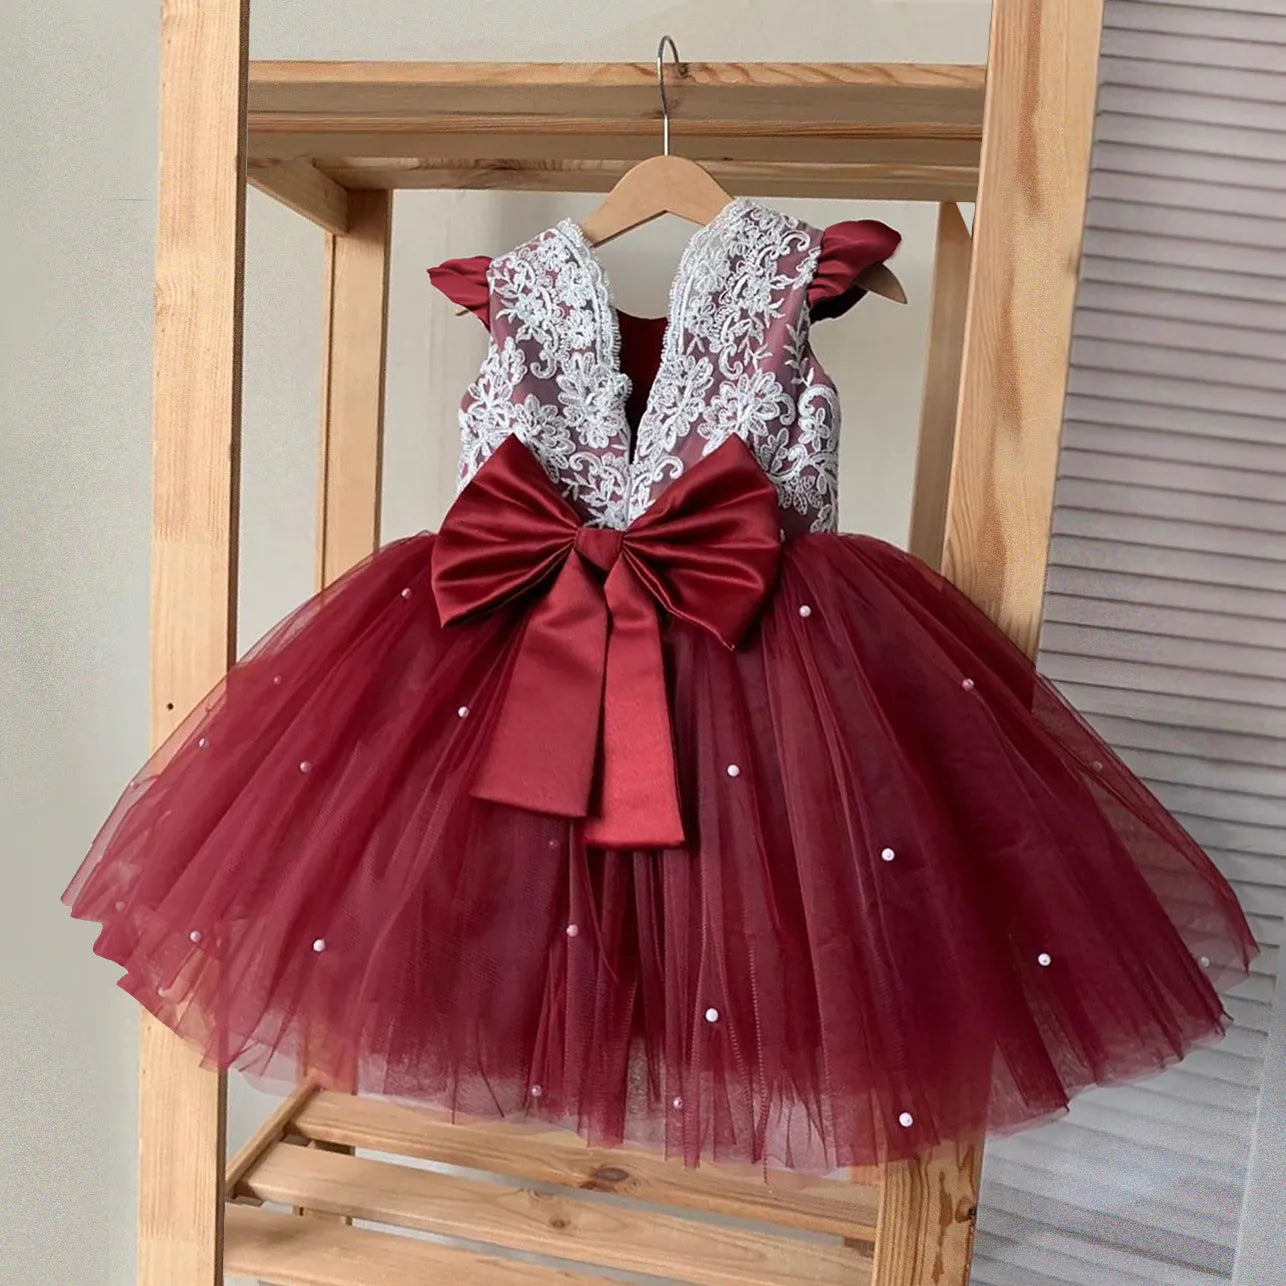 Toddler Elegant 1st birthday dress for baby girl With Tulle Skirt red by Baby Minaj Cruz